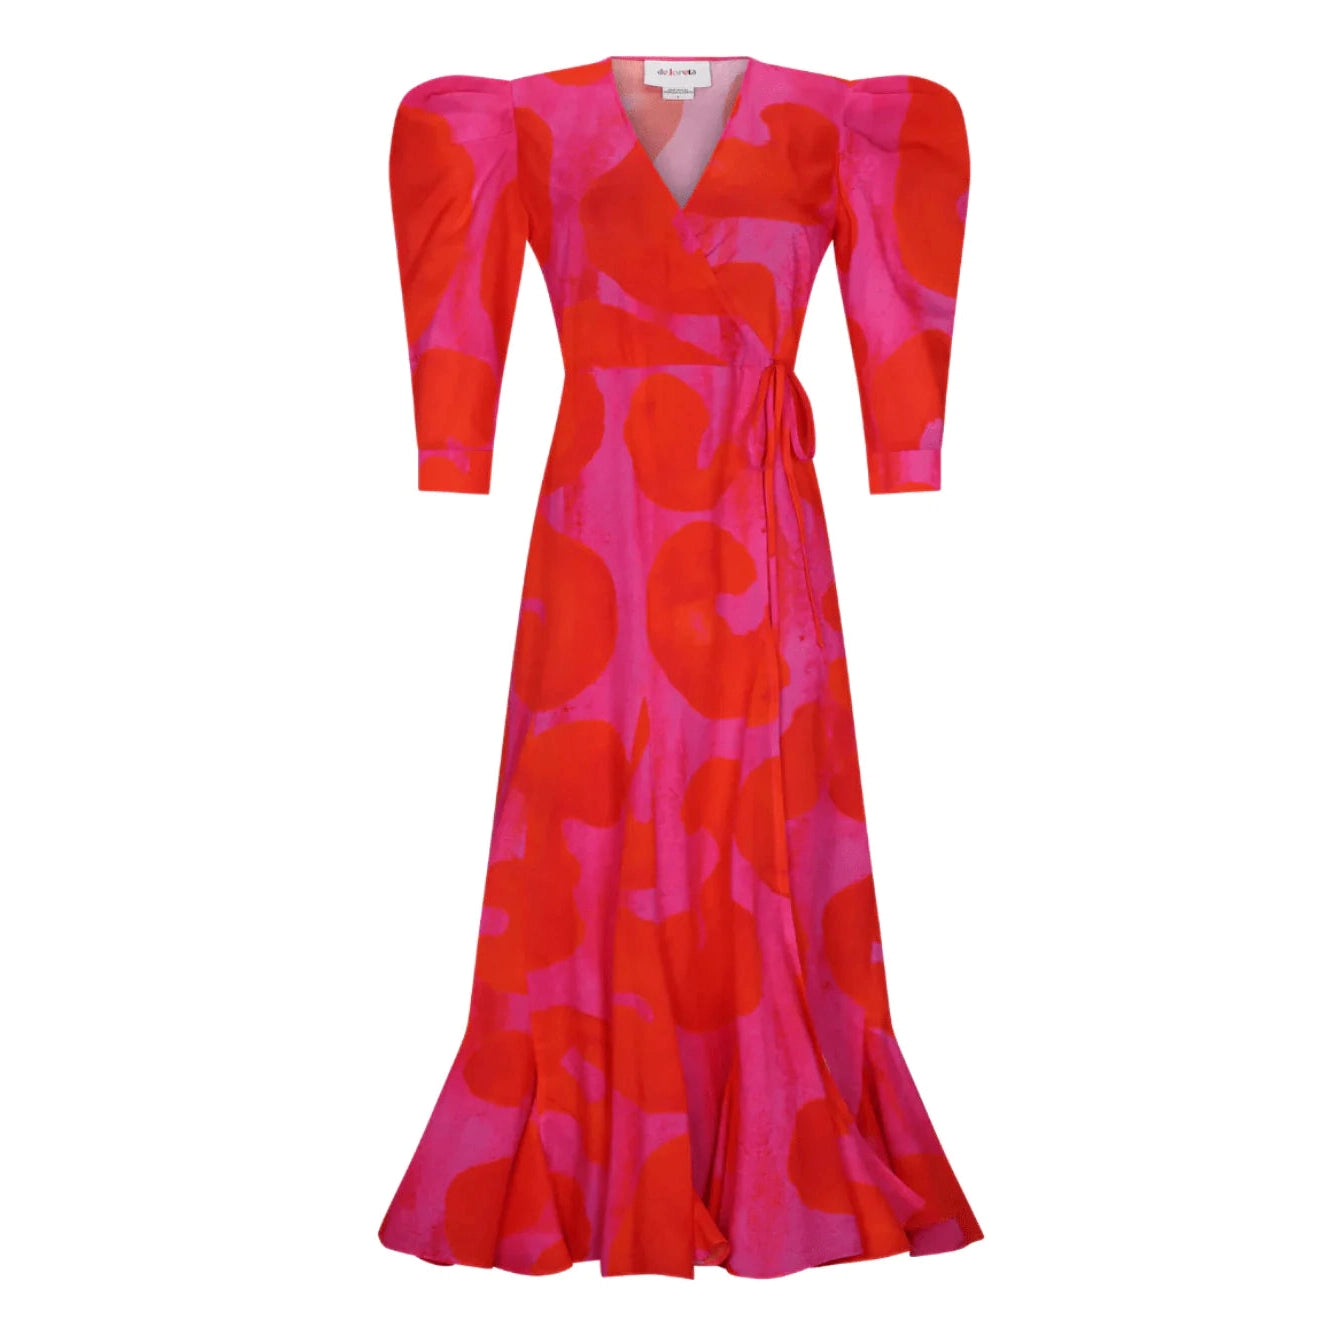 Deloreta Women's Izula Dress-Women's Clothing-Andina Print-XS-Kevin's Fine Outdoor Gear & Apparel